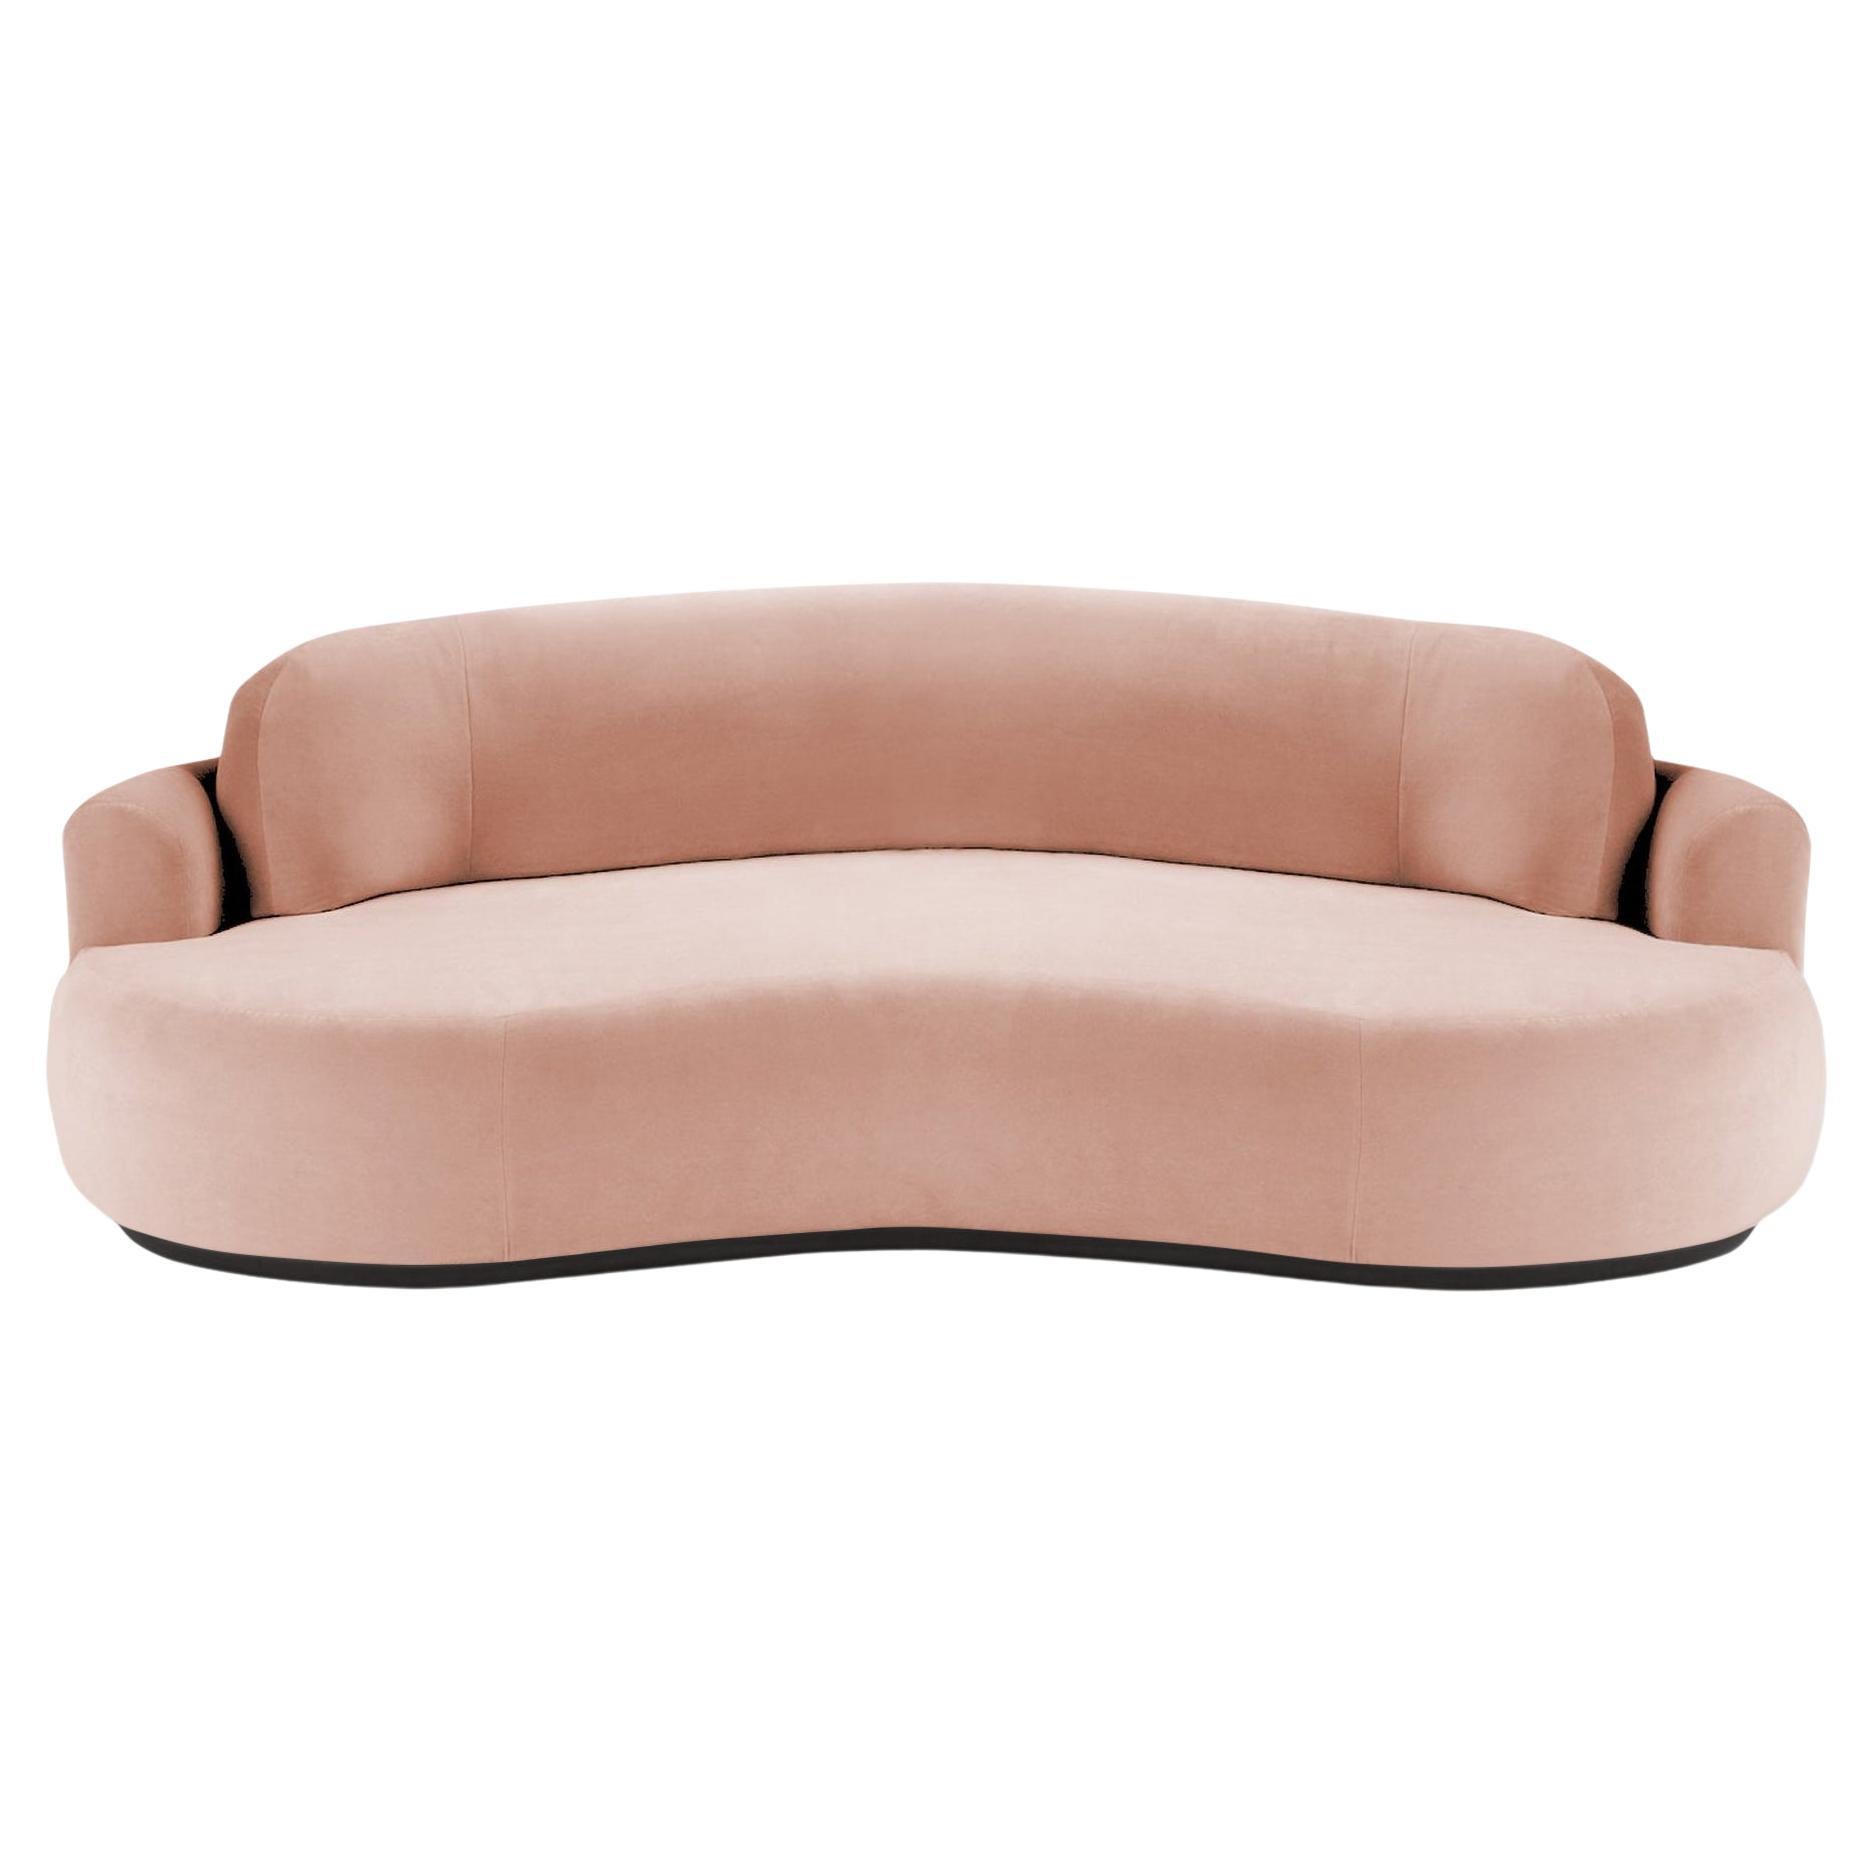 Naked Curved Sofa, Small with Beech Ash-056-5 and Vigo Blossom